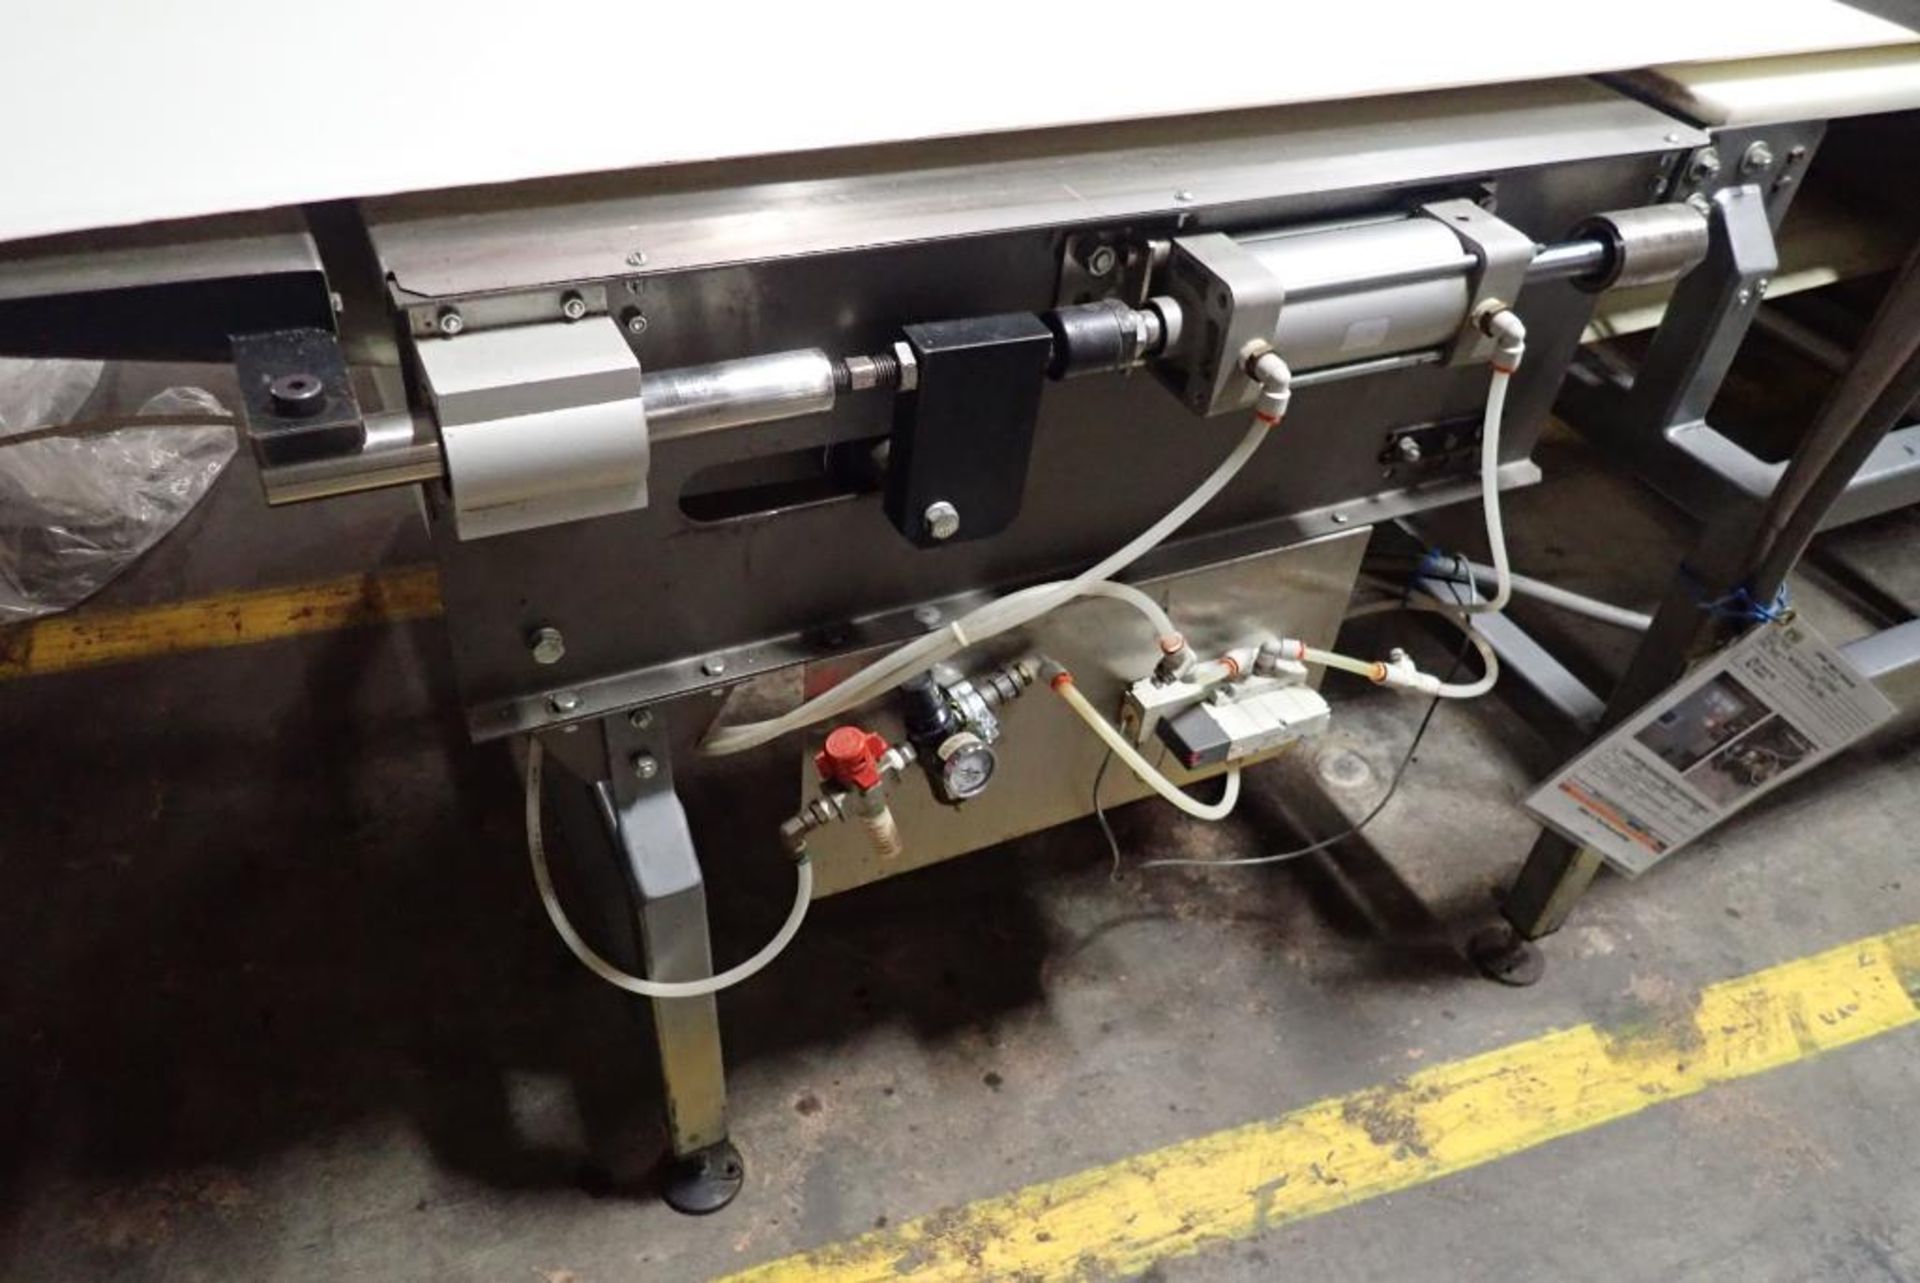 Fortress phantom metal detector with conveyor - Image 6 of 14